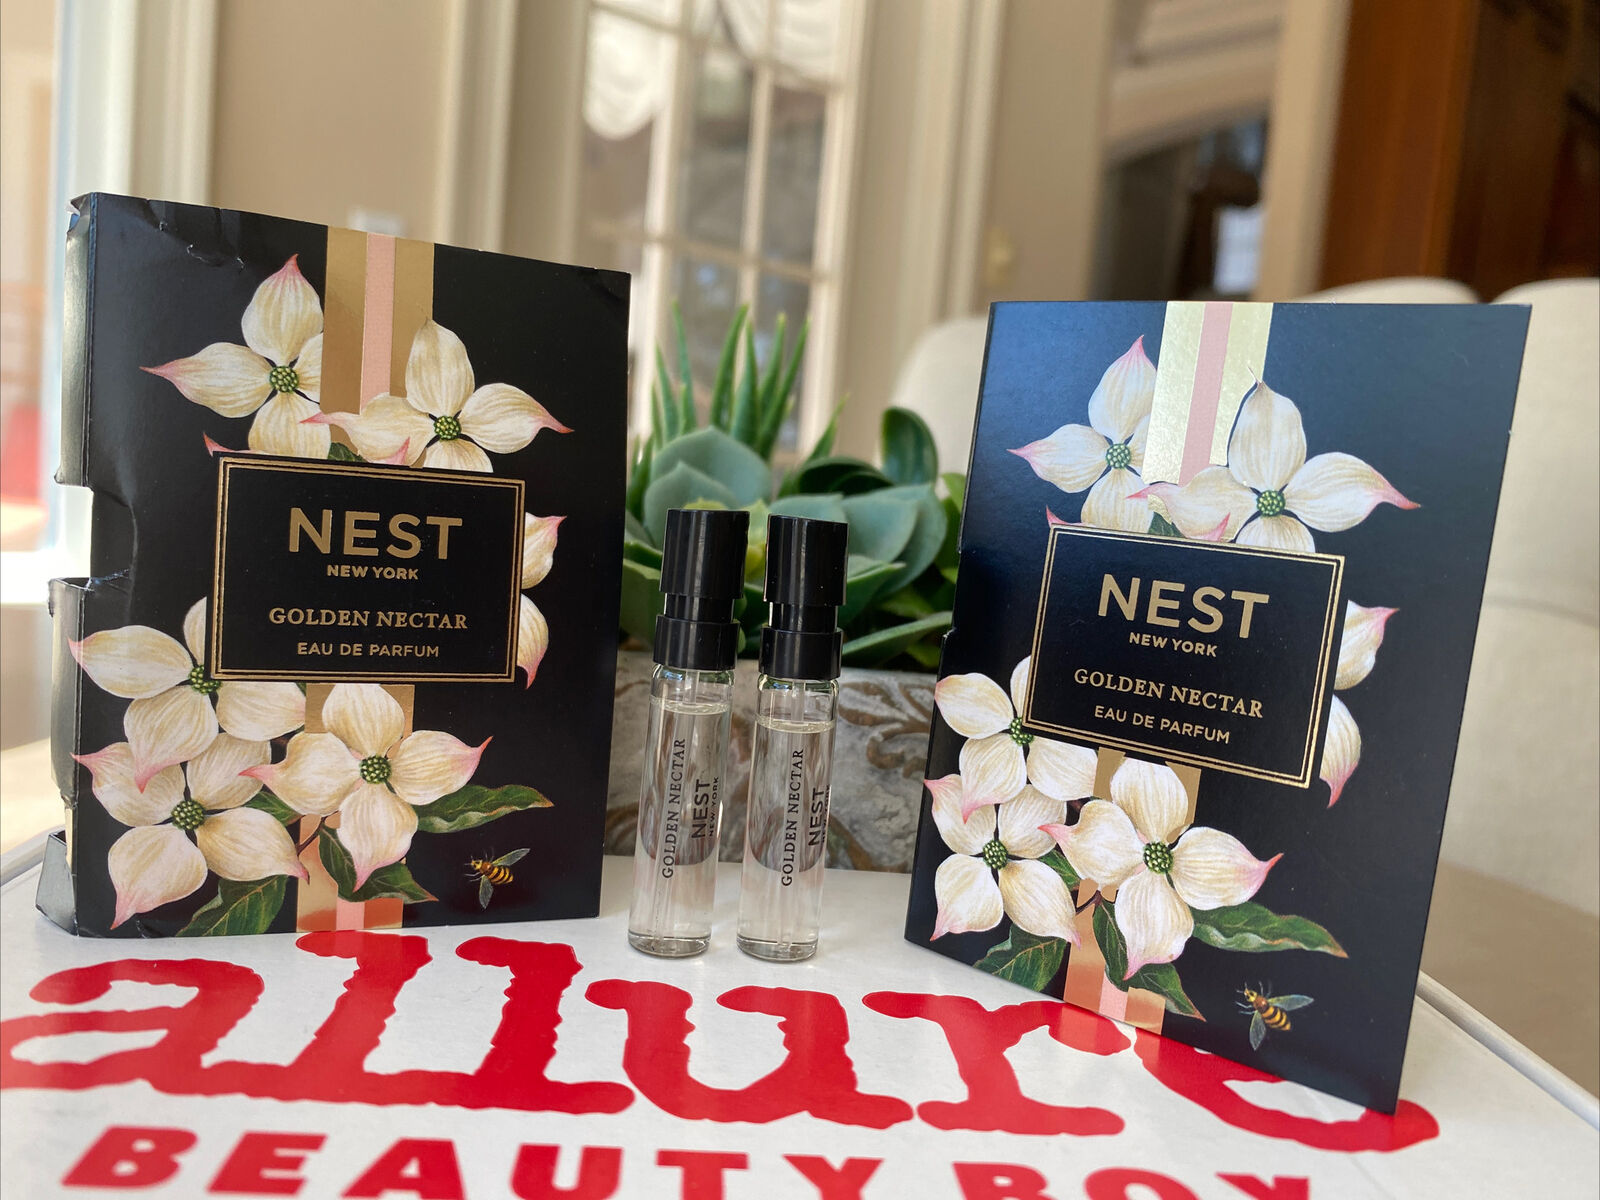 2x Nest New York Golden Nectar Eau de Parfum EDP 1.5ml Each Sample Spray NIB